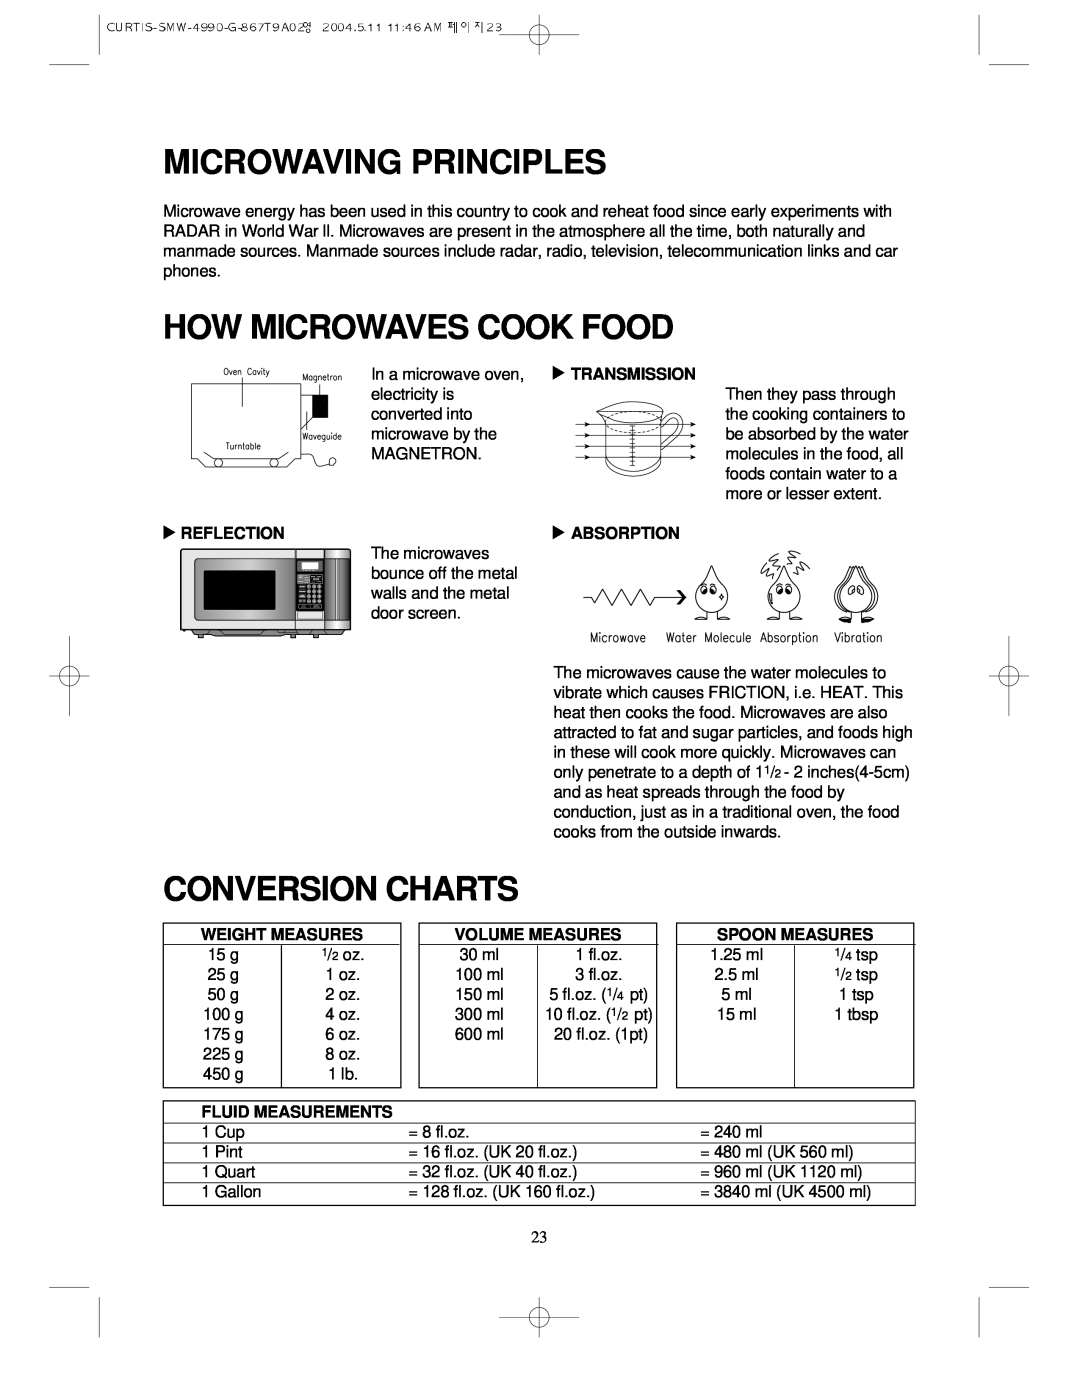 Sunbeam SMW-4990 manual Microwaving Principles, How Microwaves Cook Food, Conversion Charts, Reflection, Absorption 